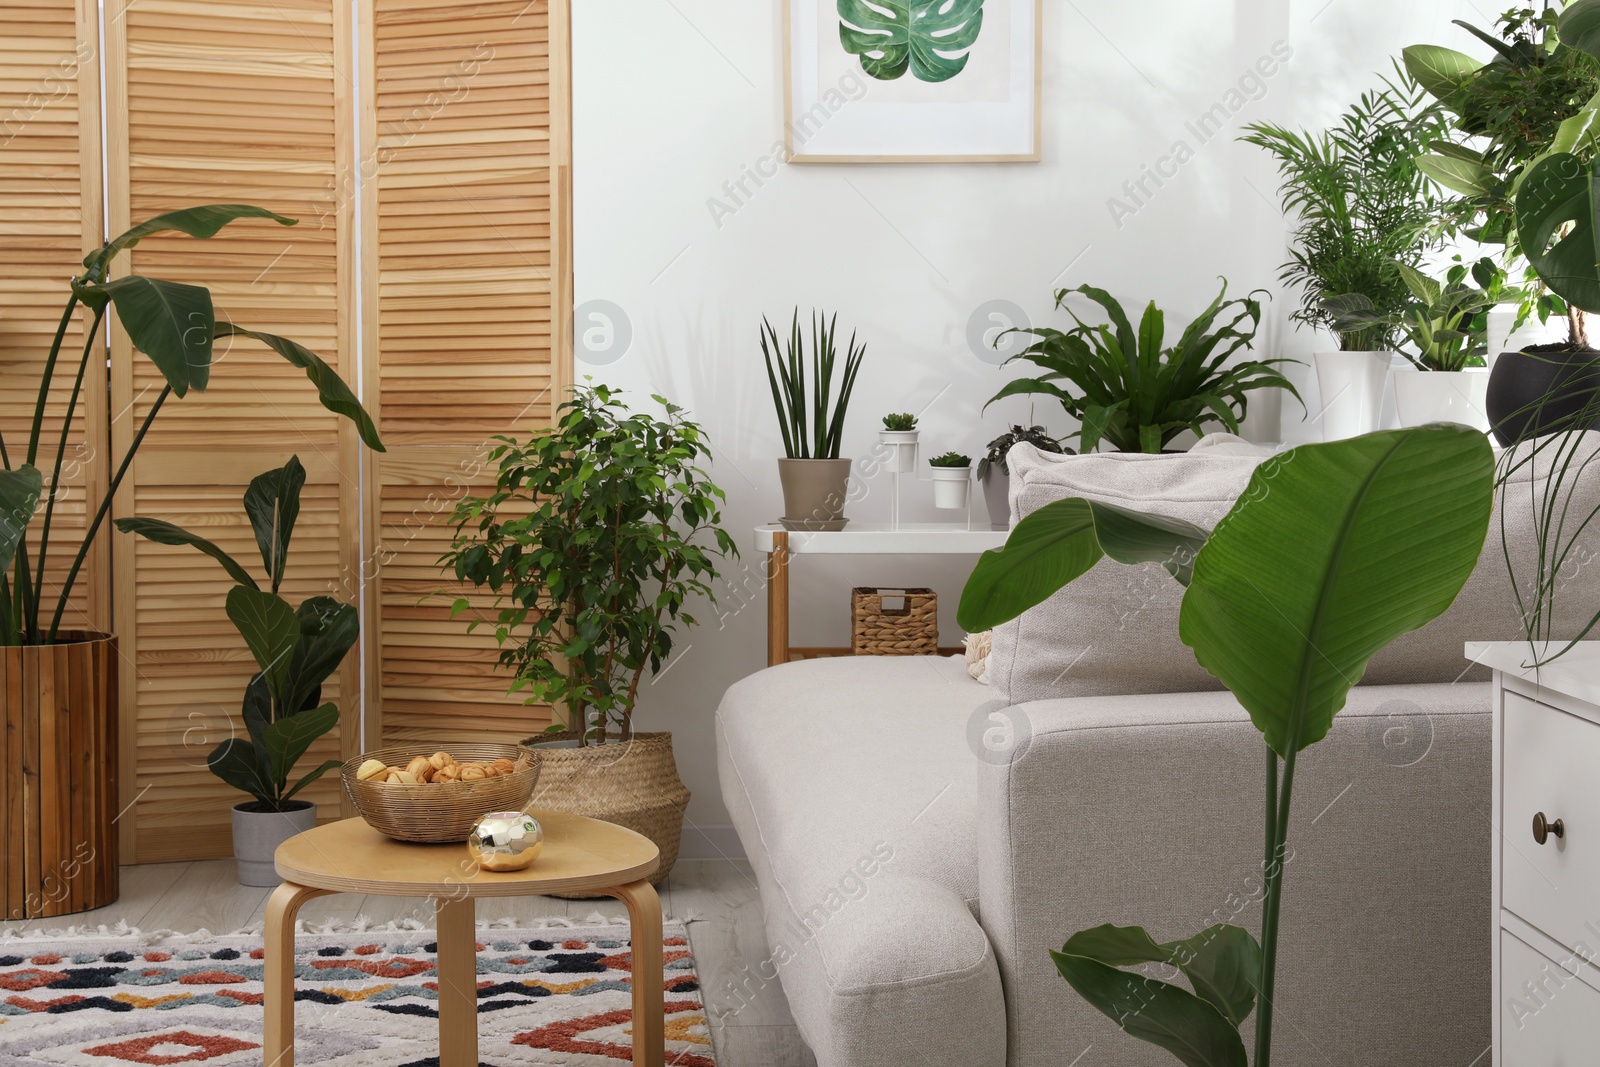 Photo of Stylish room with comfortable sofa, coffee table and beautiful houseplants. Interior design